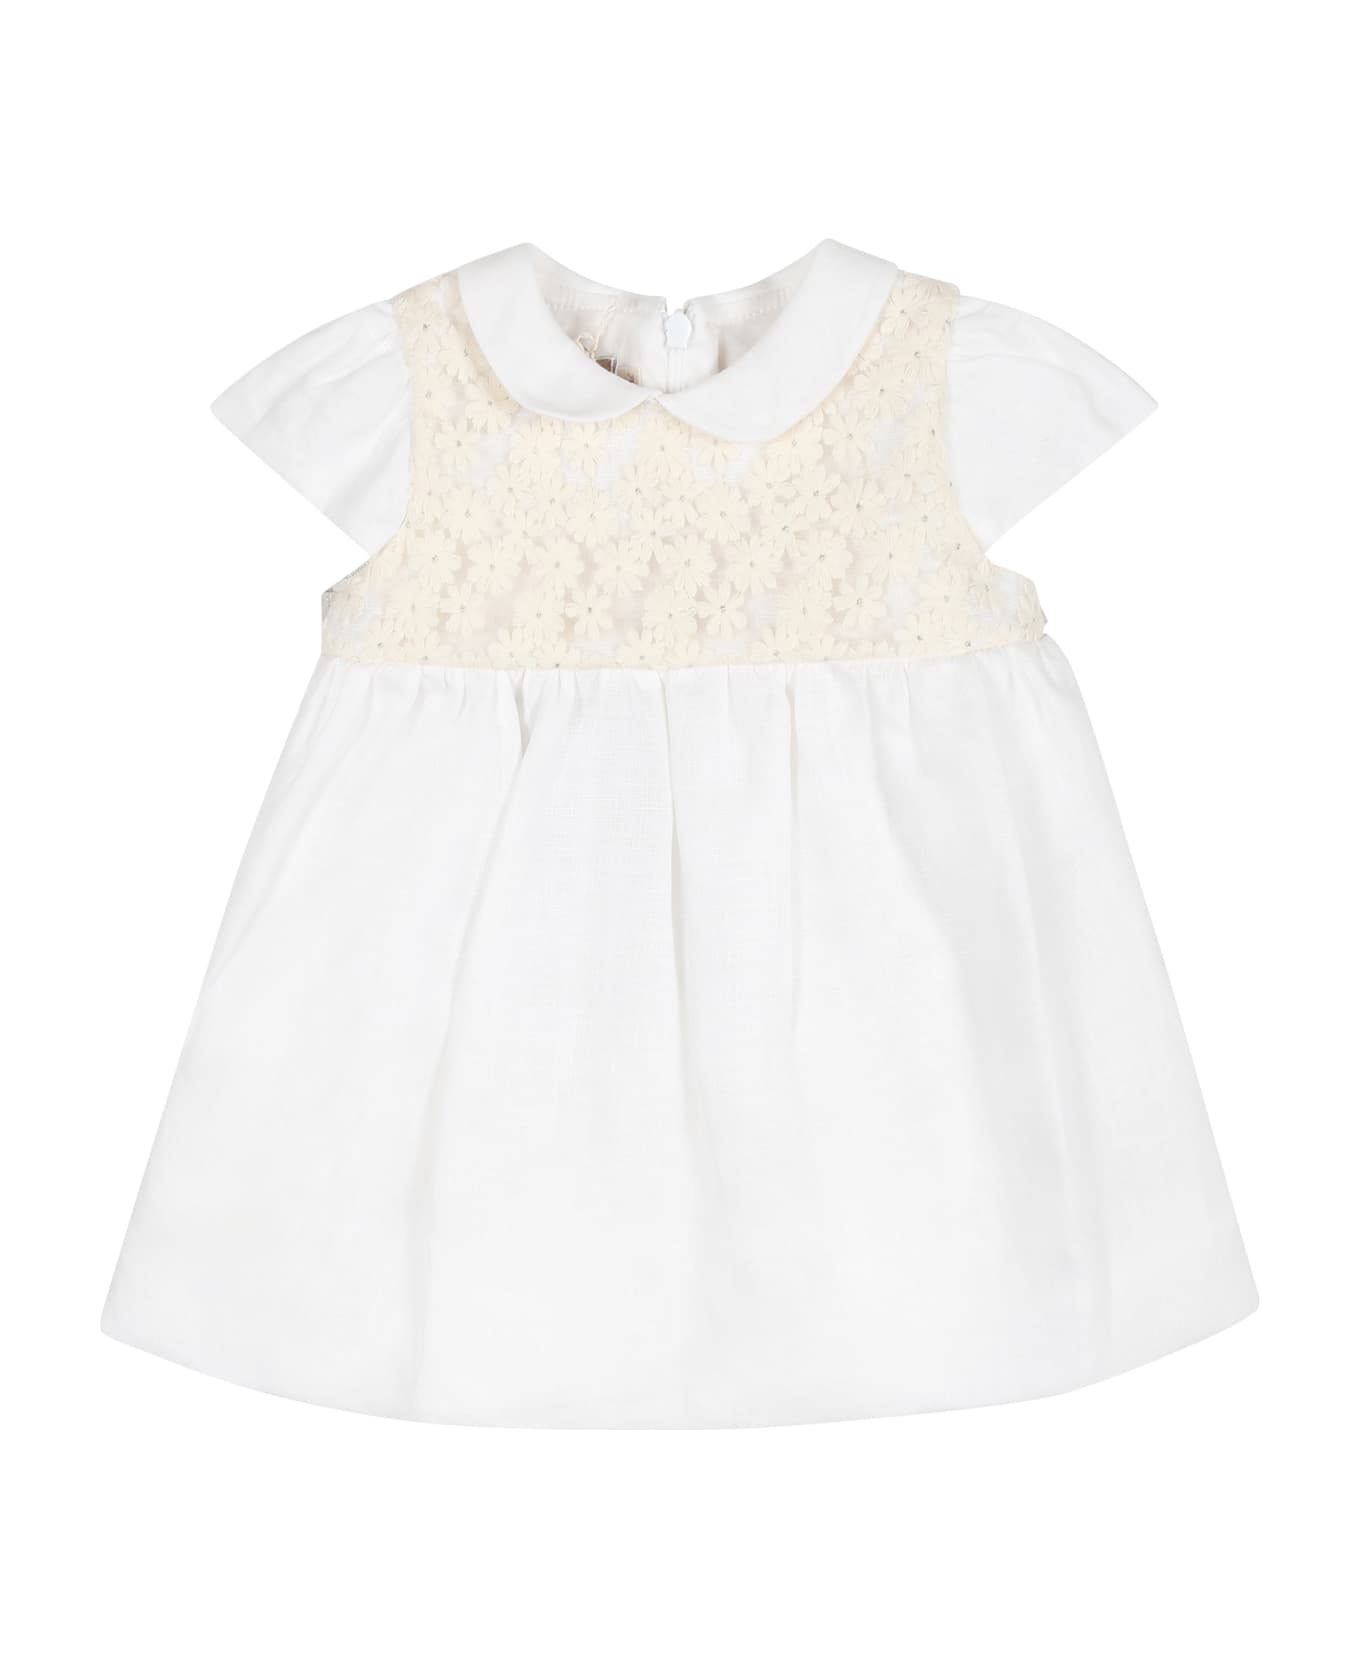 La stupenderia White Dress For Baby Girl With Little Flowers - White ウェア